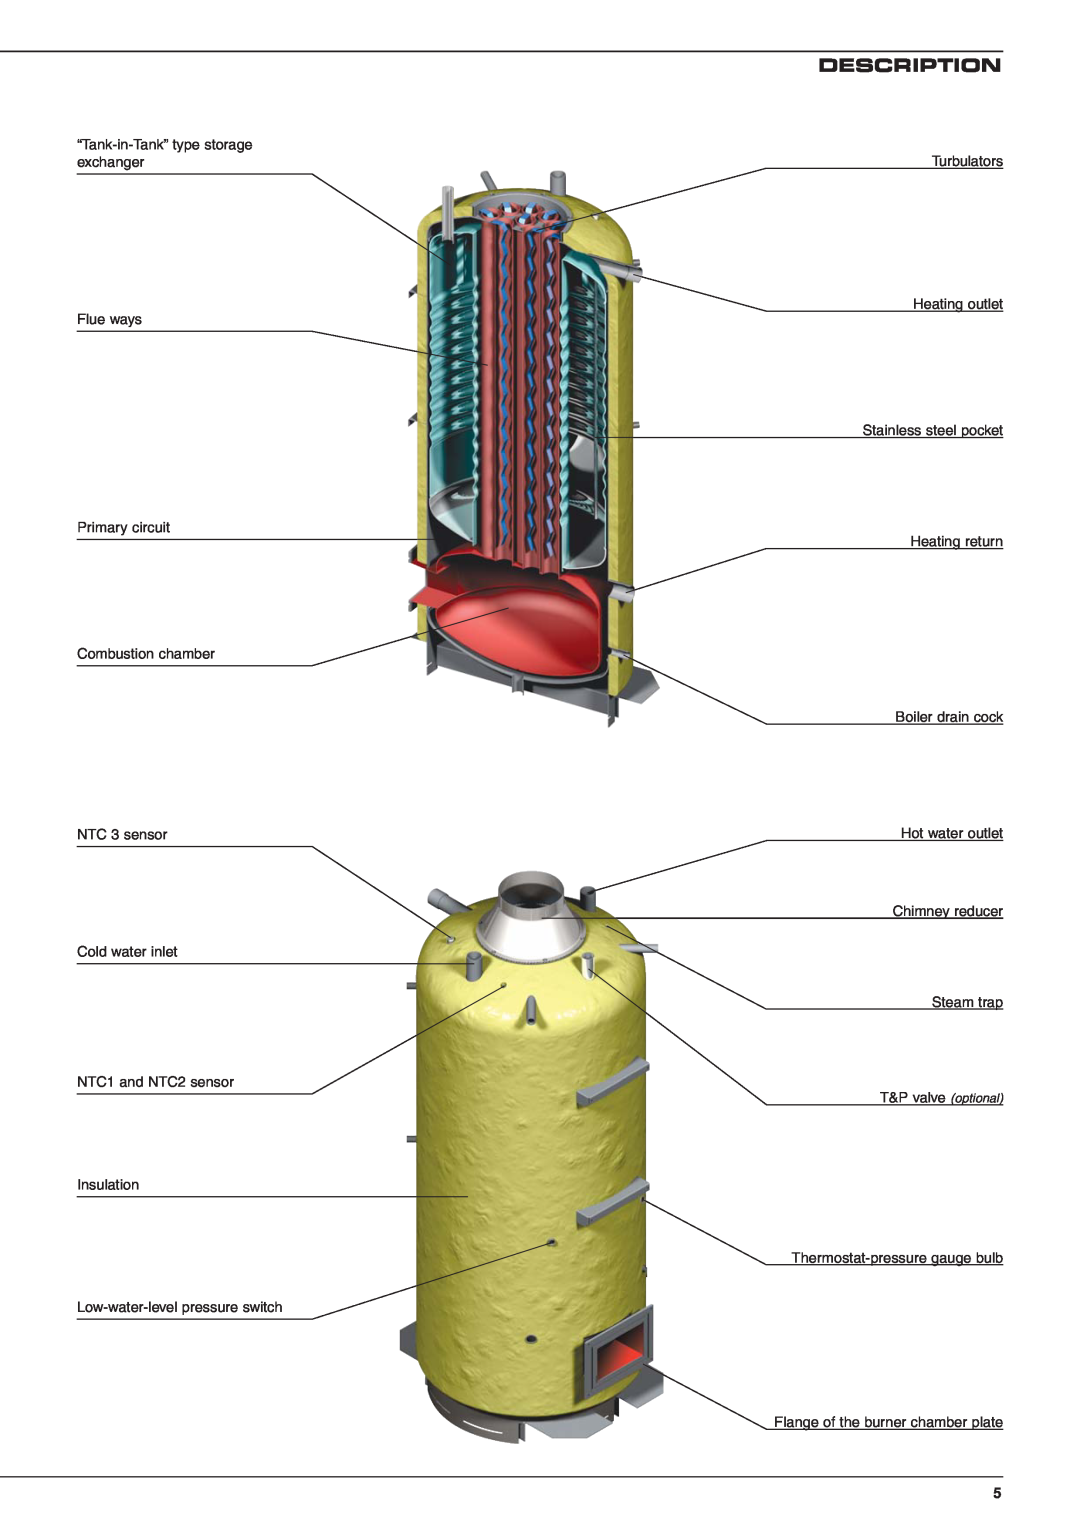 Heatmaster 201 manual Description, “Tank-in-Tank”type storage exchanger Flue ways, Low-water-levelpressure switch 